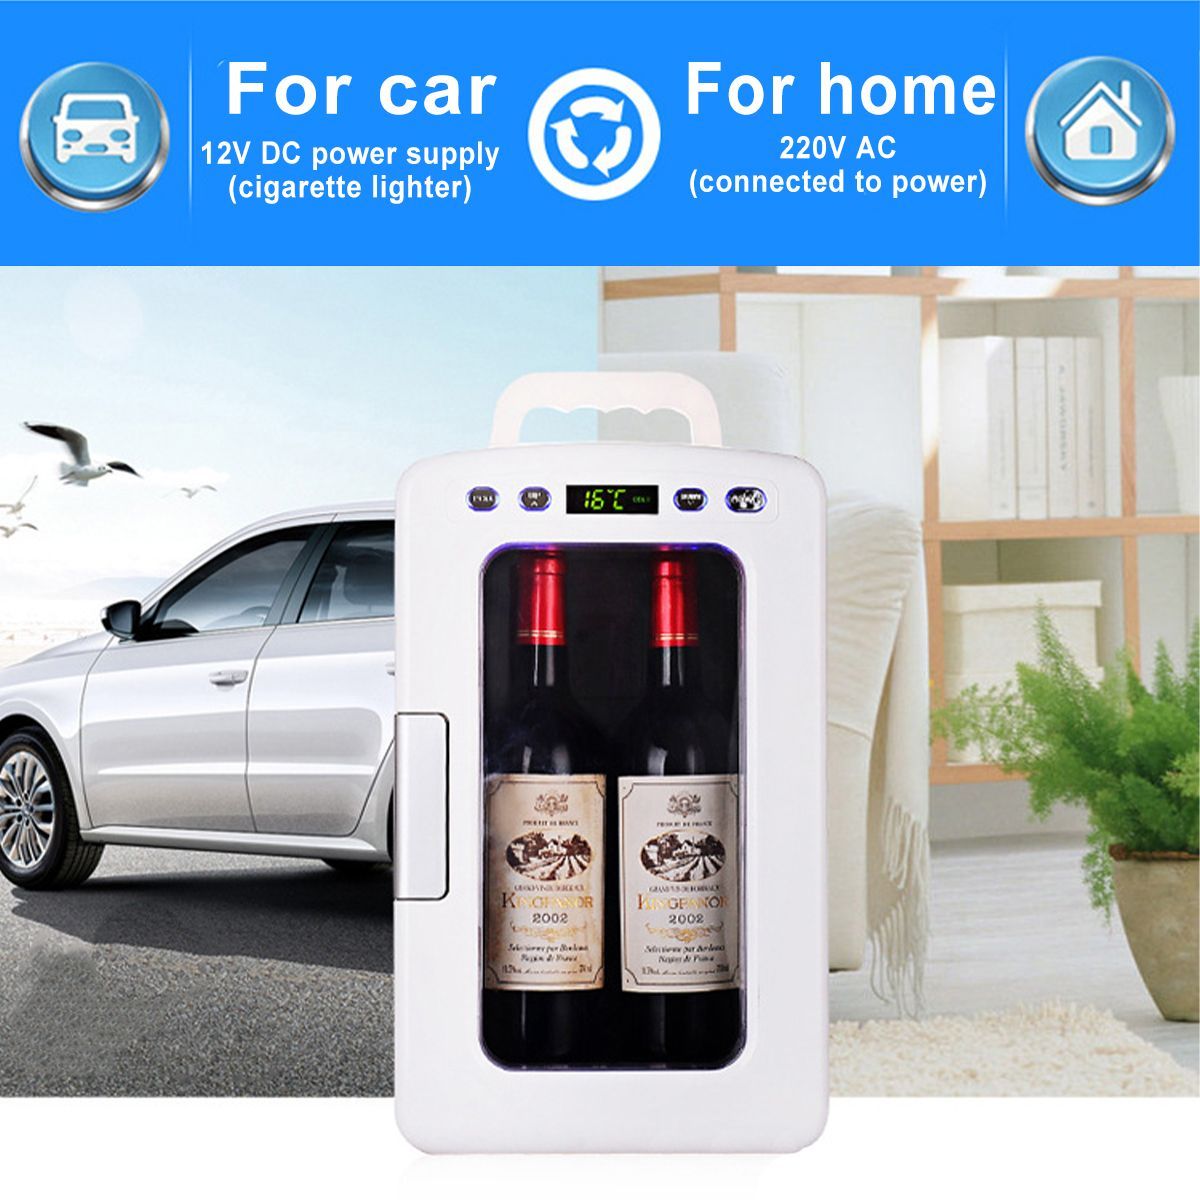 10L-Car-12V-Home-220V-Mini-Refrigerator-Dual-System-Temperature-Control-Portable-1617186